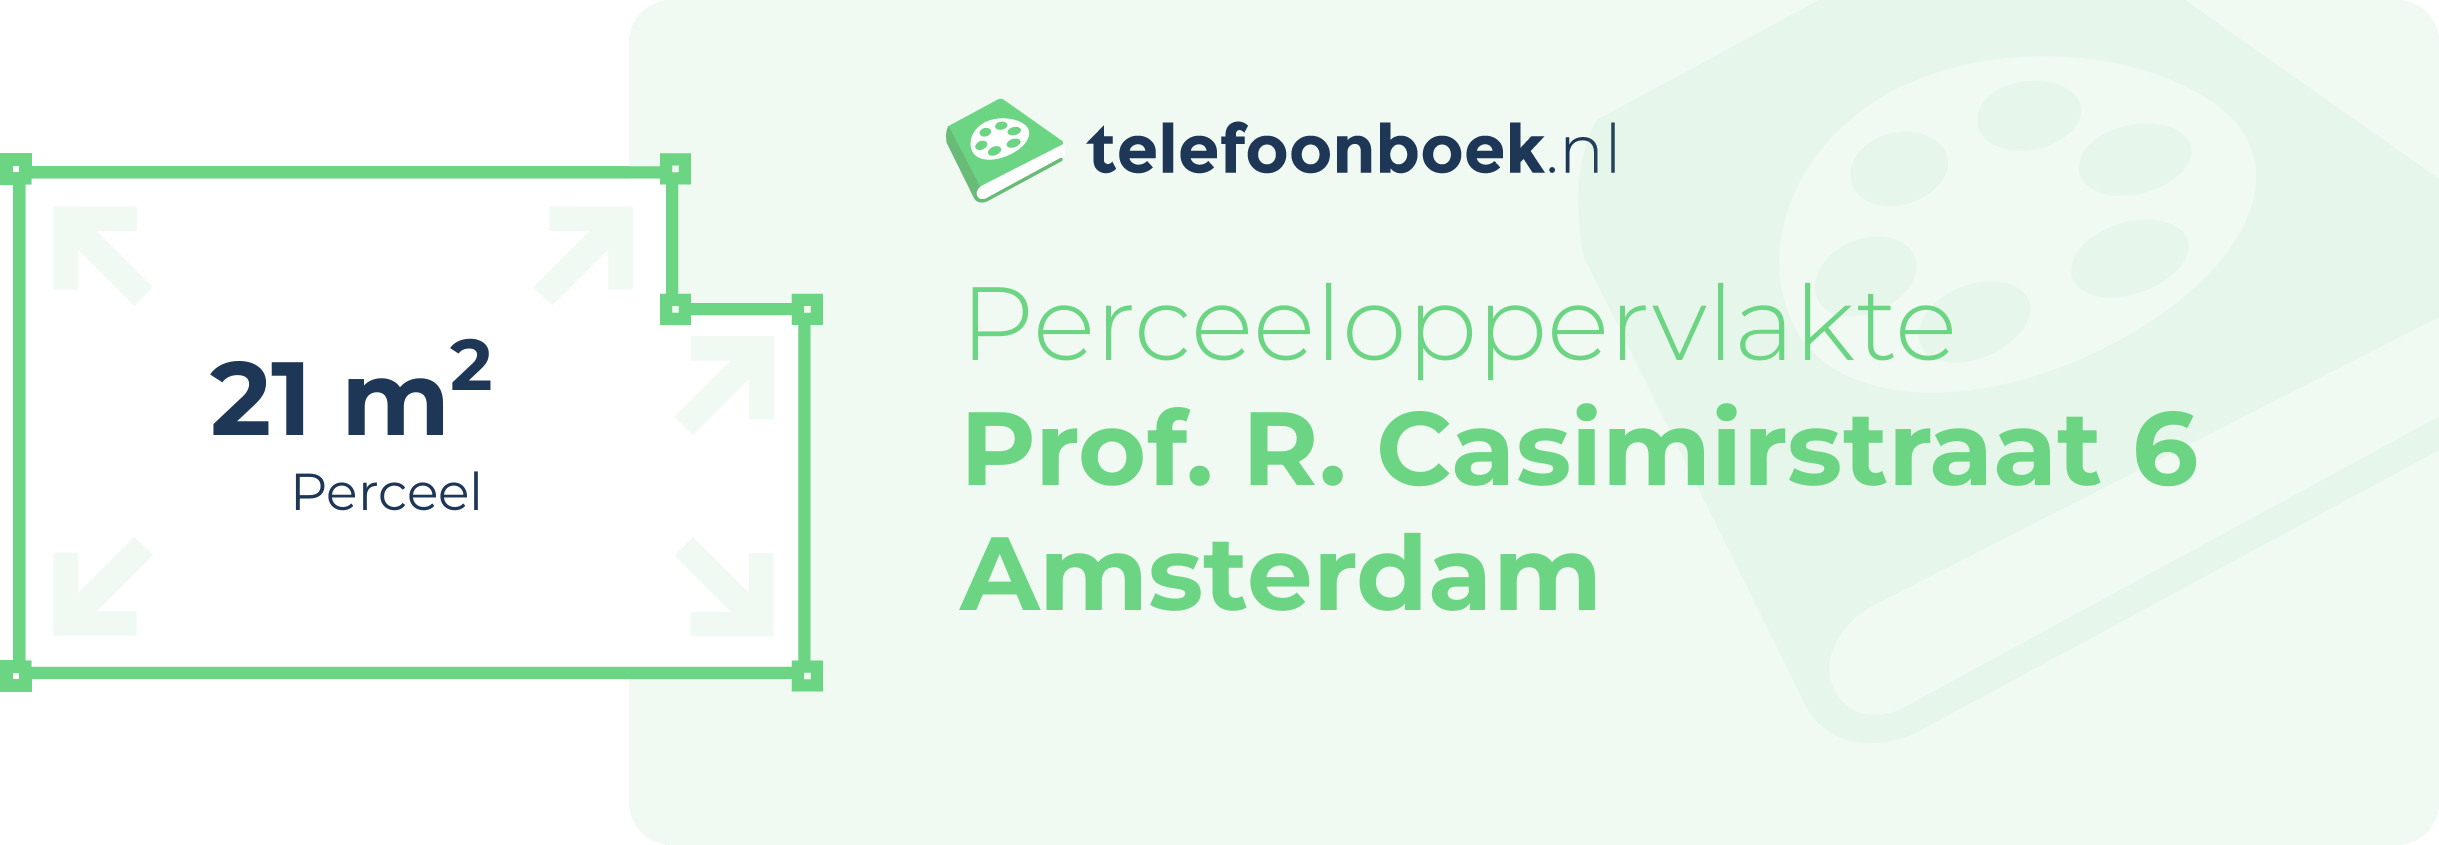 Perceeloppervlakte Prof. R. Casimirstraat 6 Amsterdam